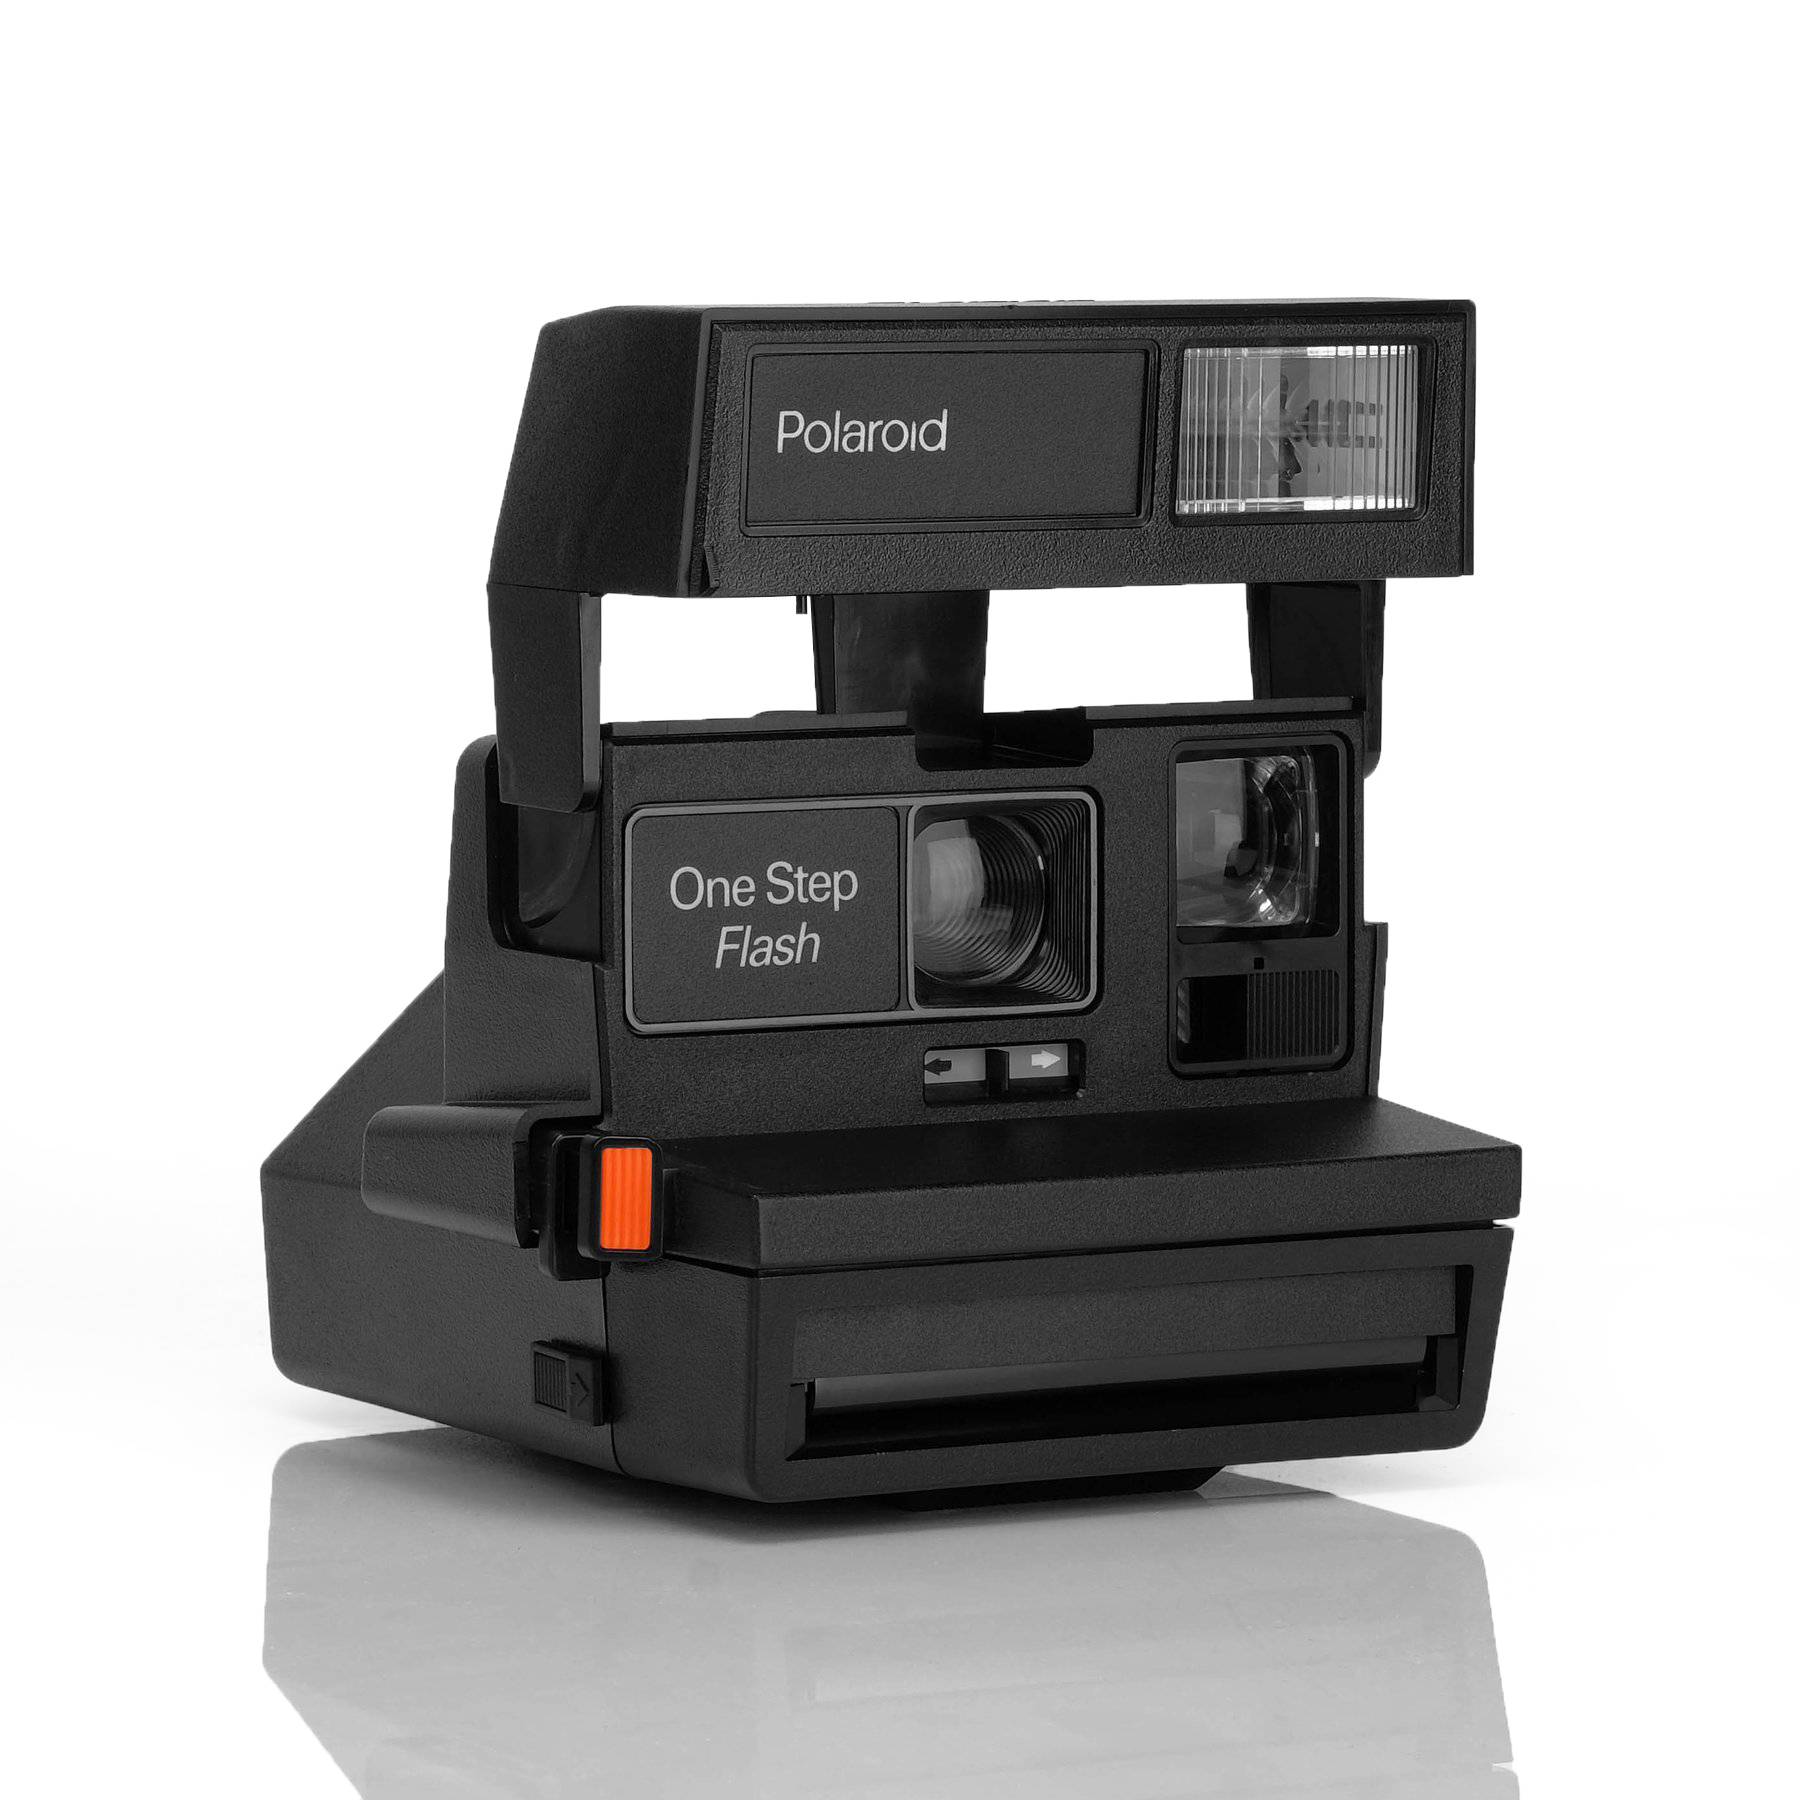 Polaroid 600 One Step Flash Instant Camera